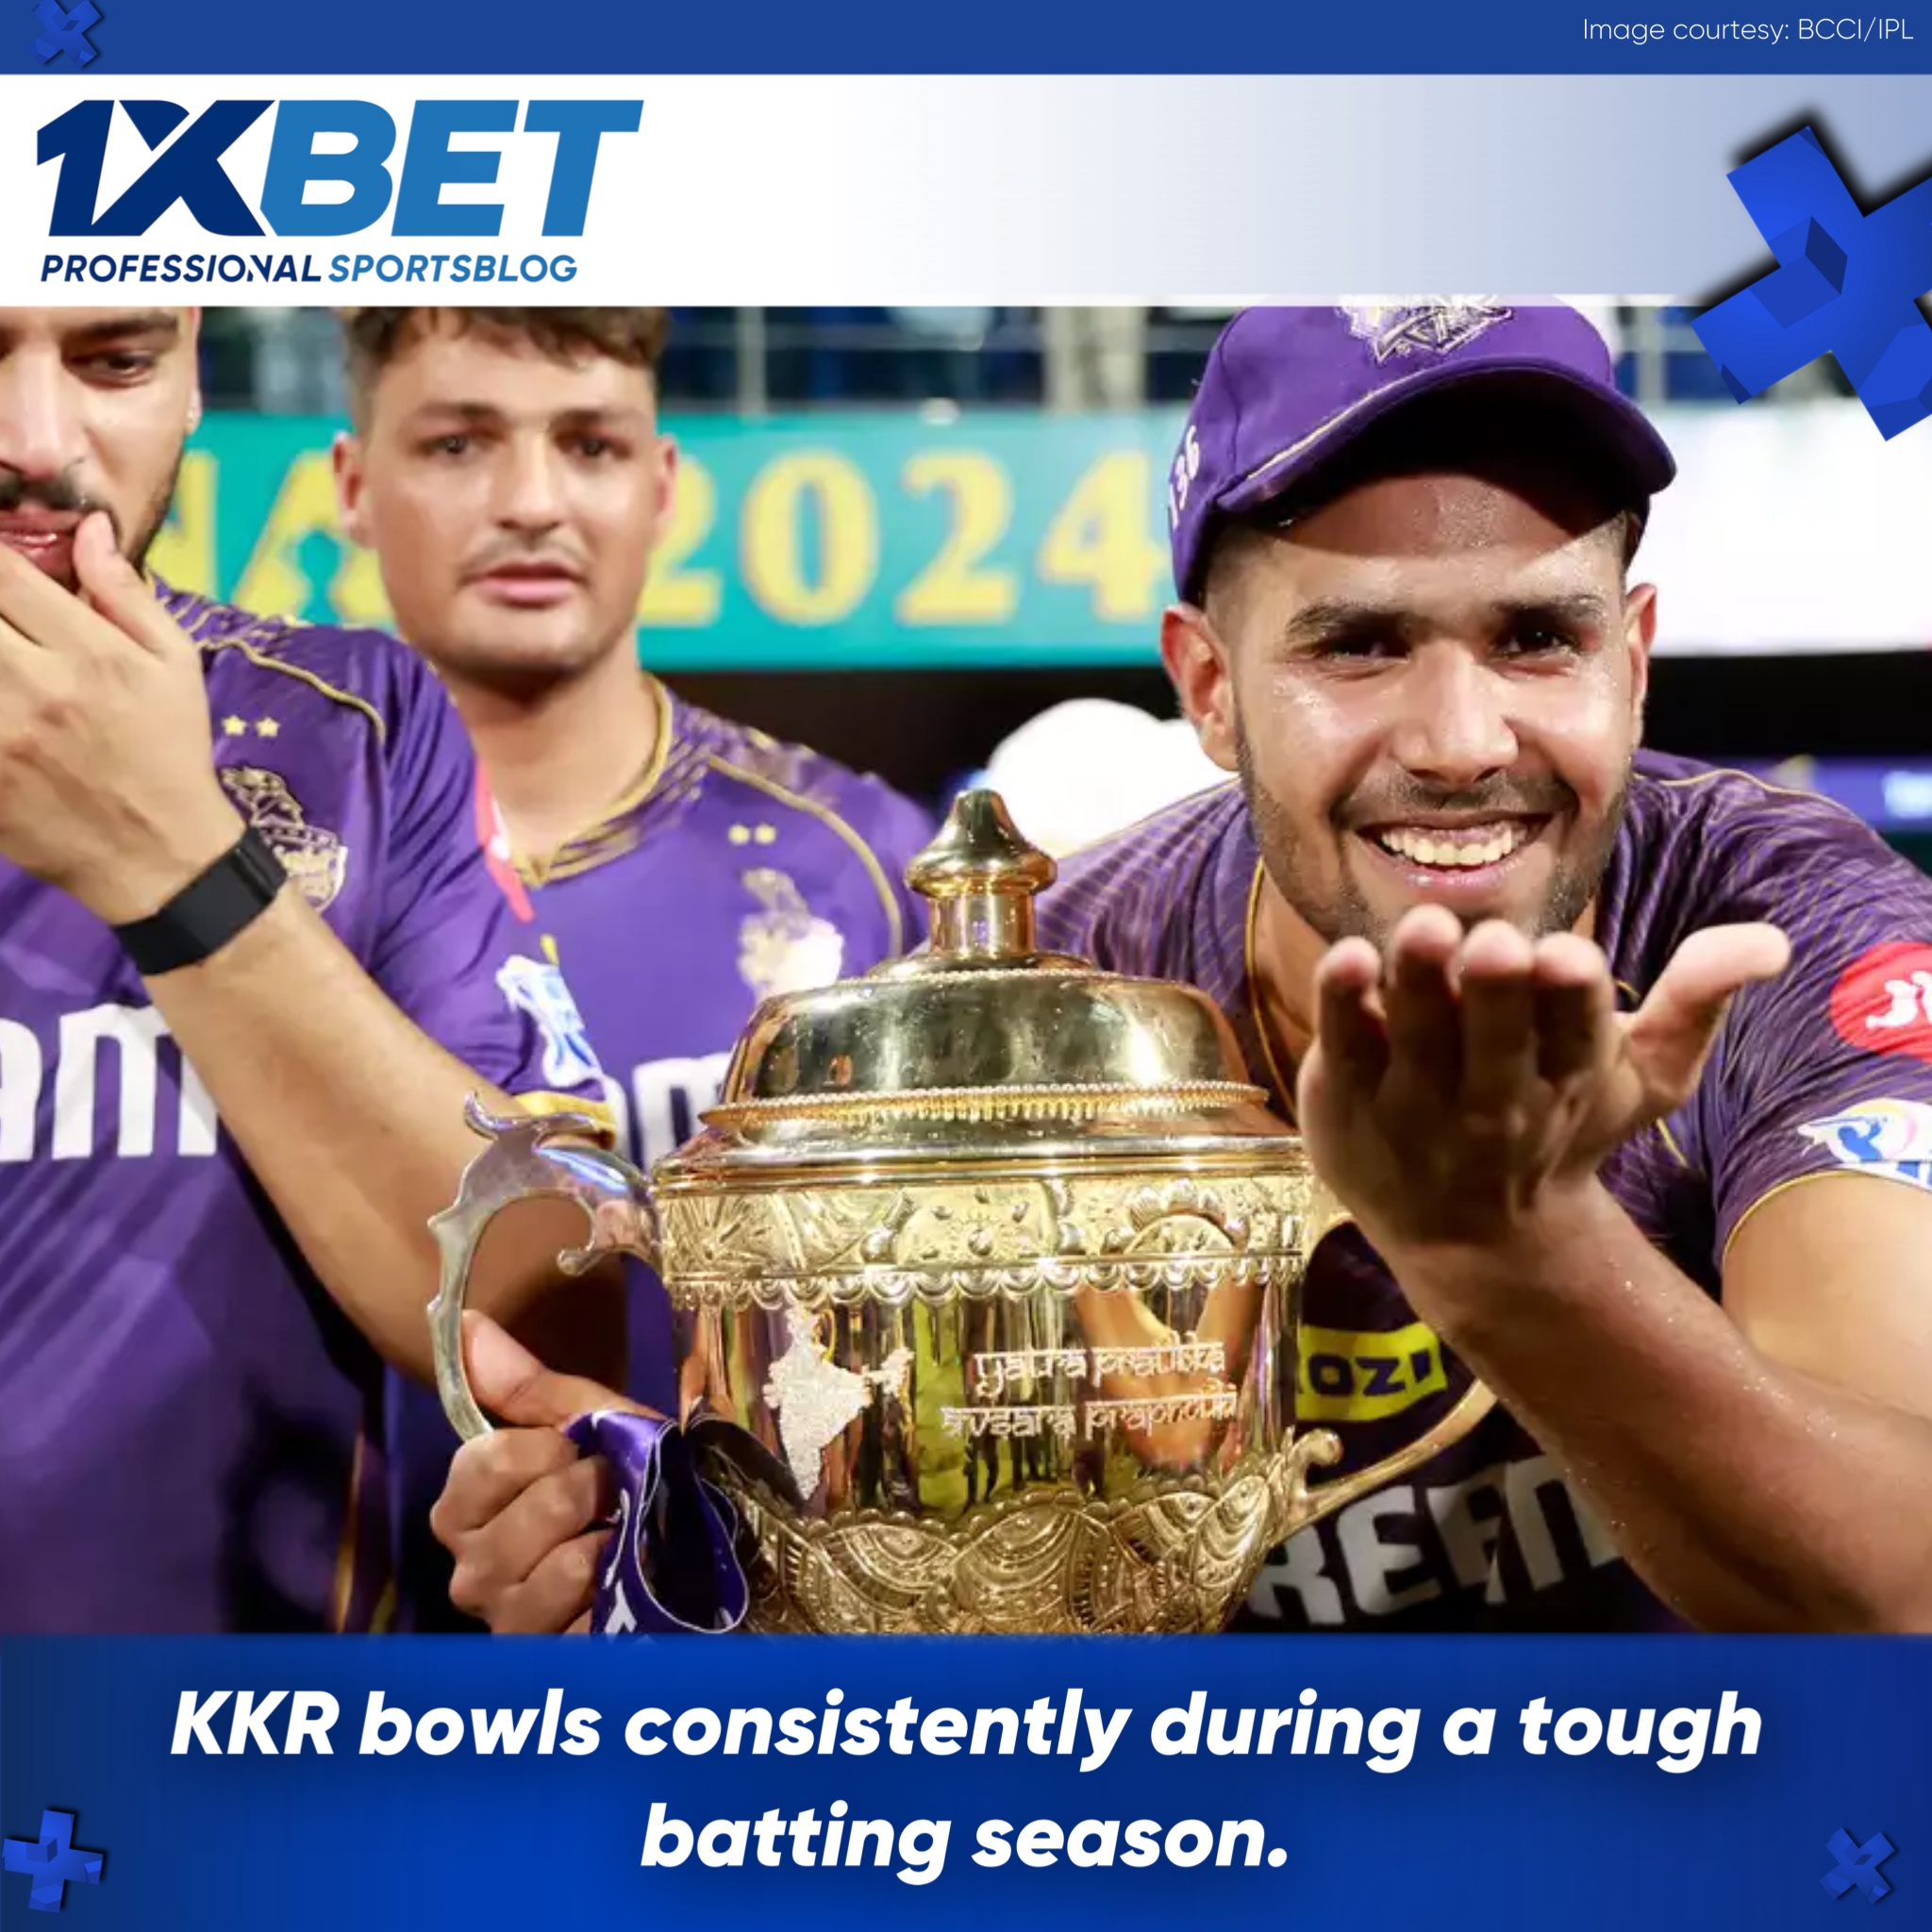 KKR's Bowling Resurgence Propels Them to IPL Glory